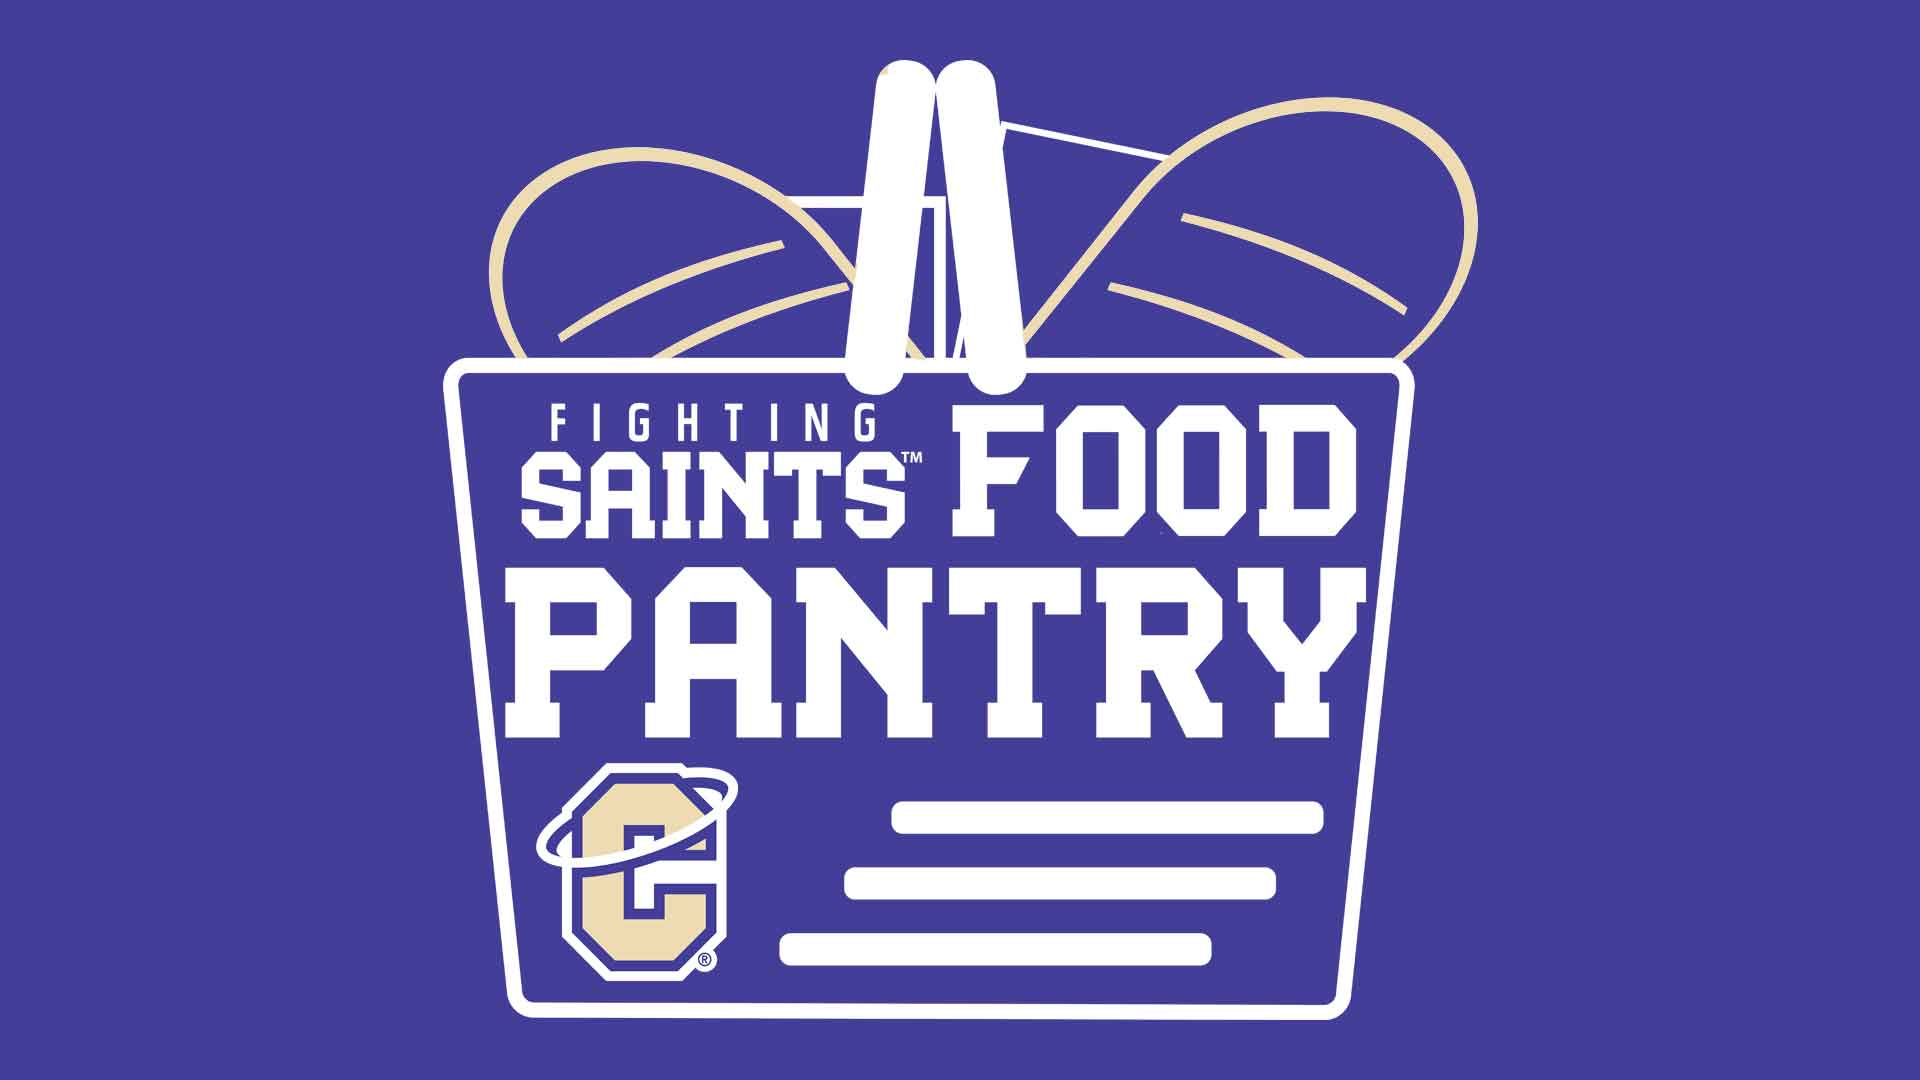 Fighting Saints Food Pantry